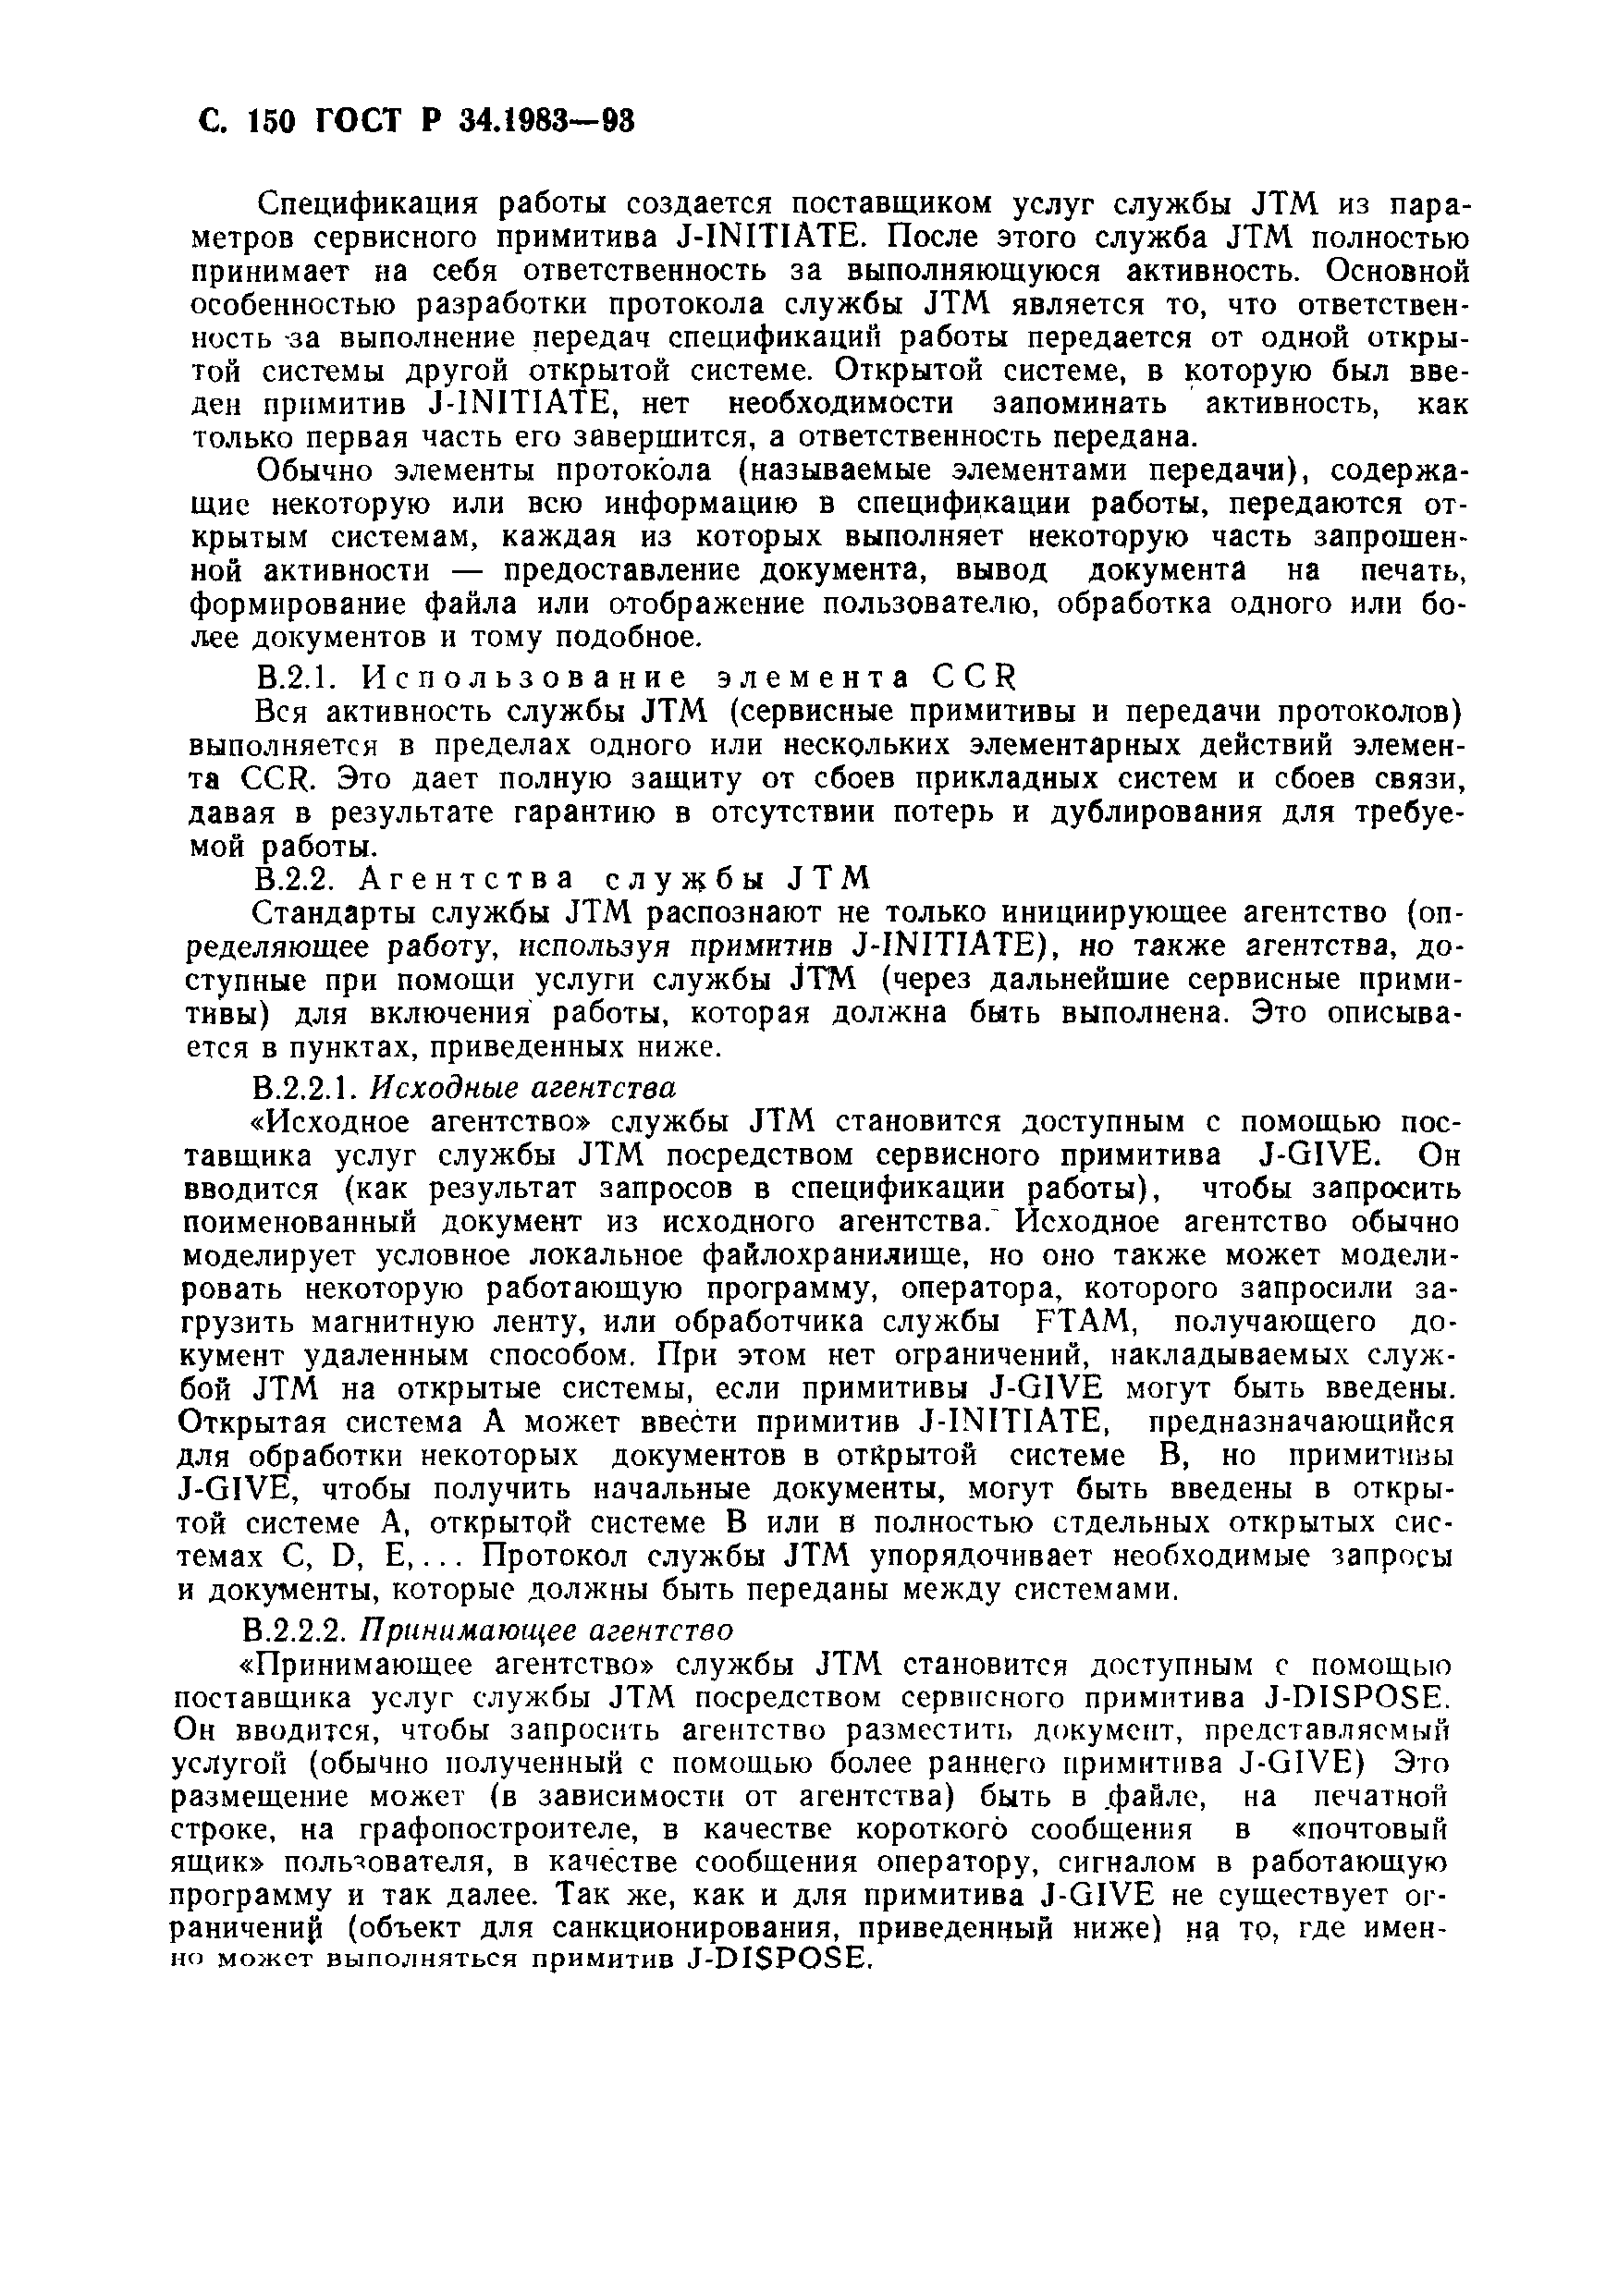 ГОСТ Р 34.1983-93. Страница 151